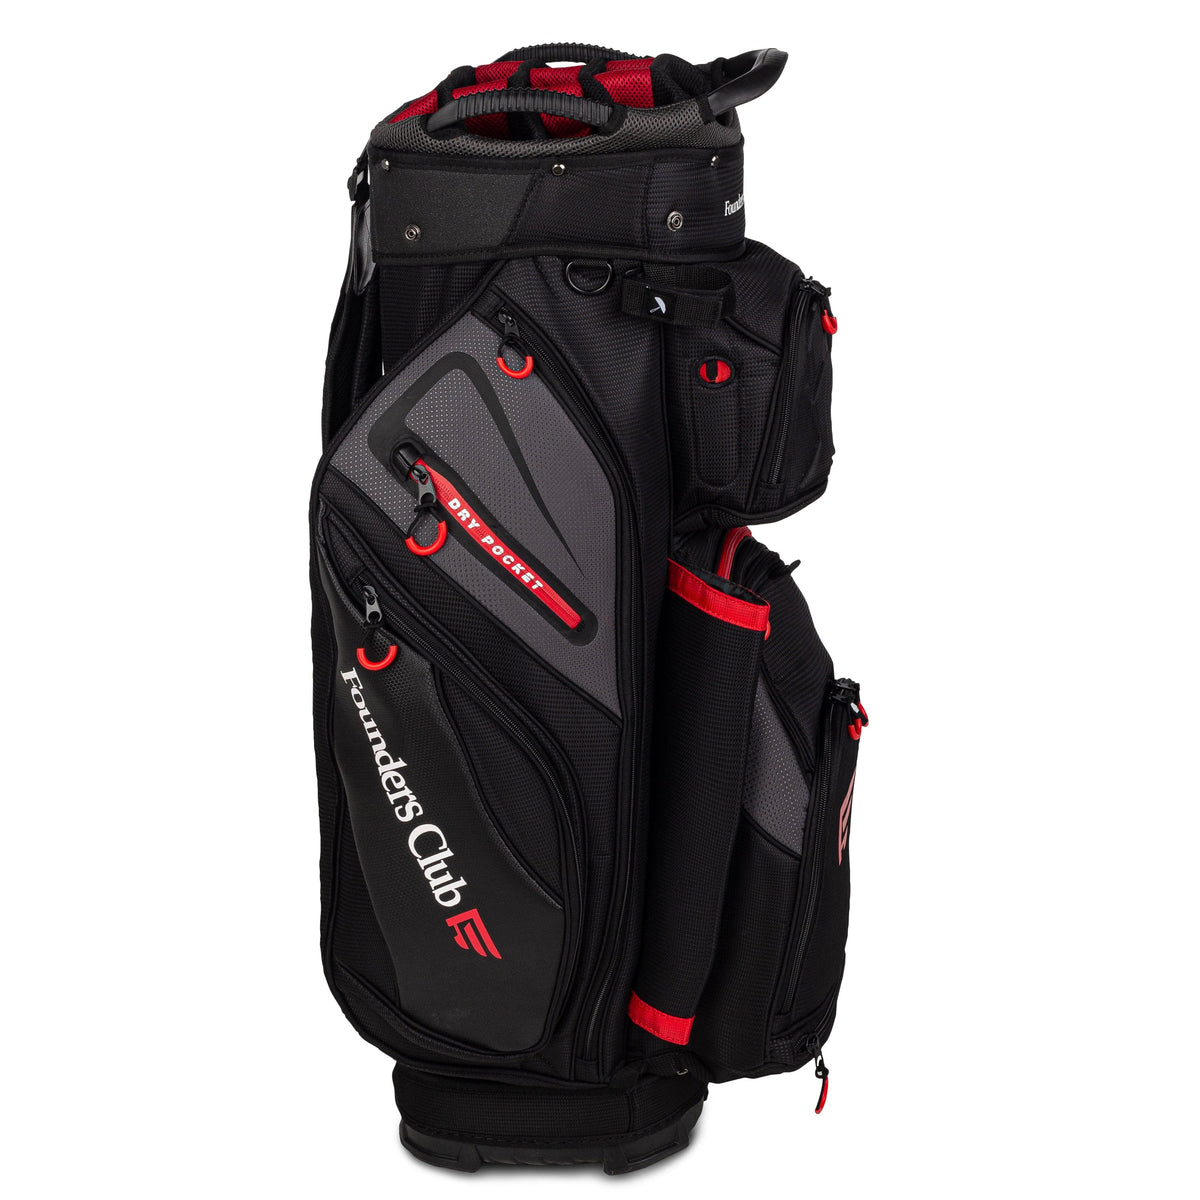 Founders Club Colorado 14 Way Full Length Divider Golf Cart Bag